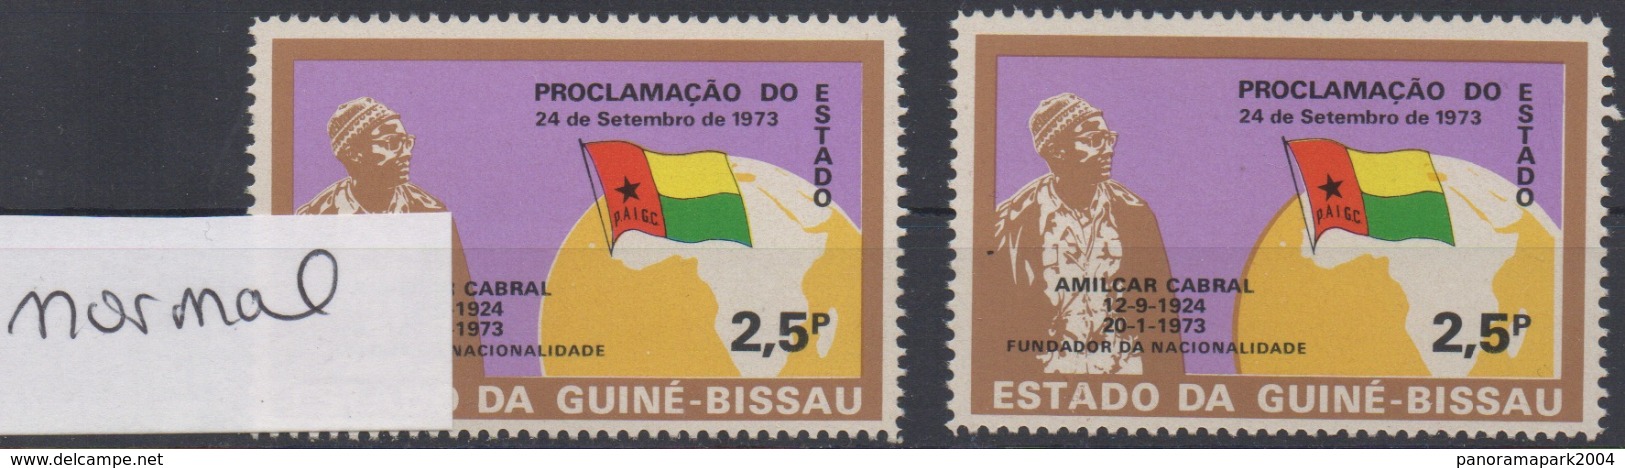 Guiné-Bissau Guinea 1973 1974 ERROR VARIETY Moved Flag Mi. 346 Republic History Politics Map Karte Flagge Fahne Drapeau - Guinea-Bissau